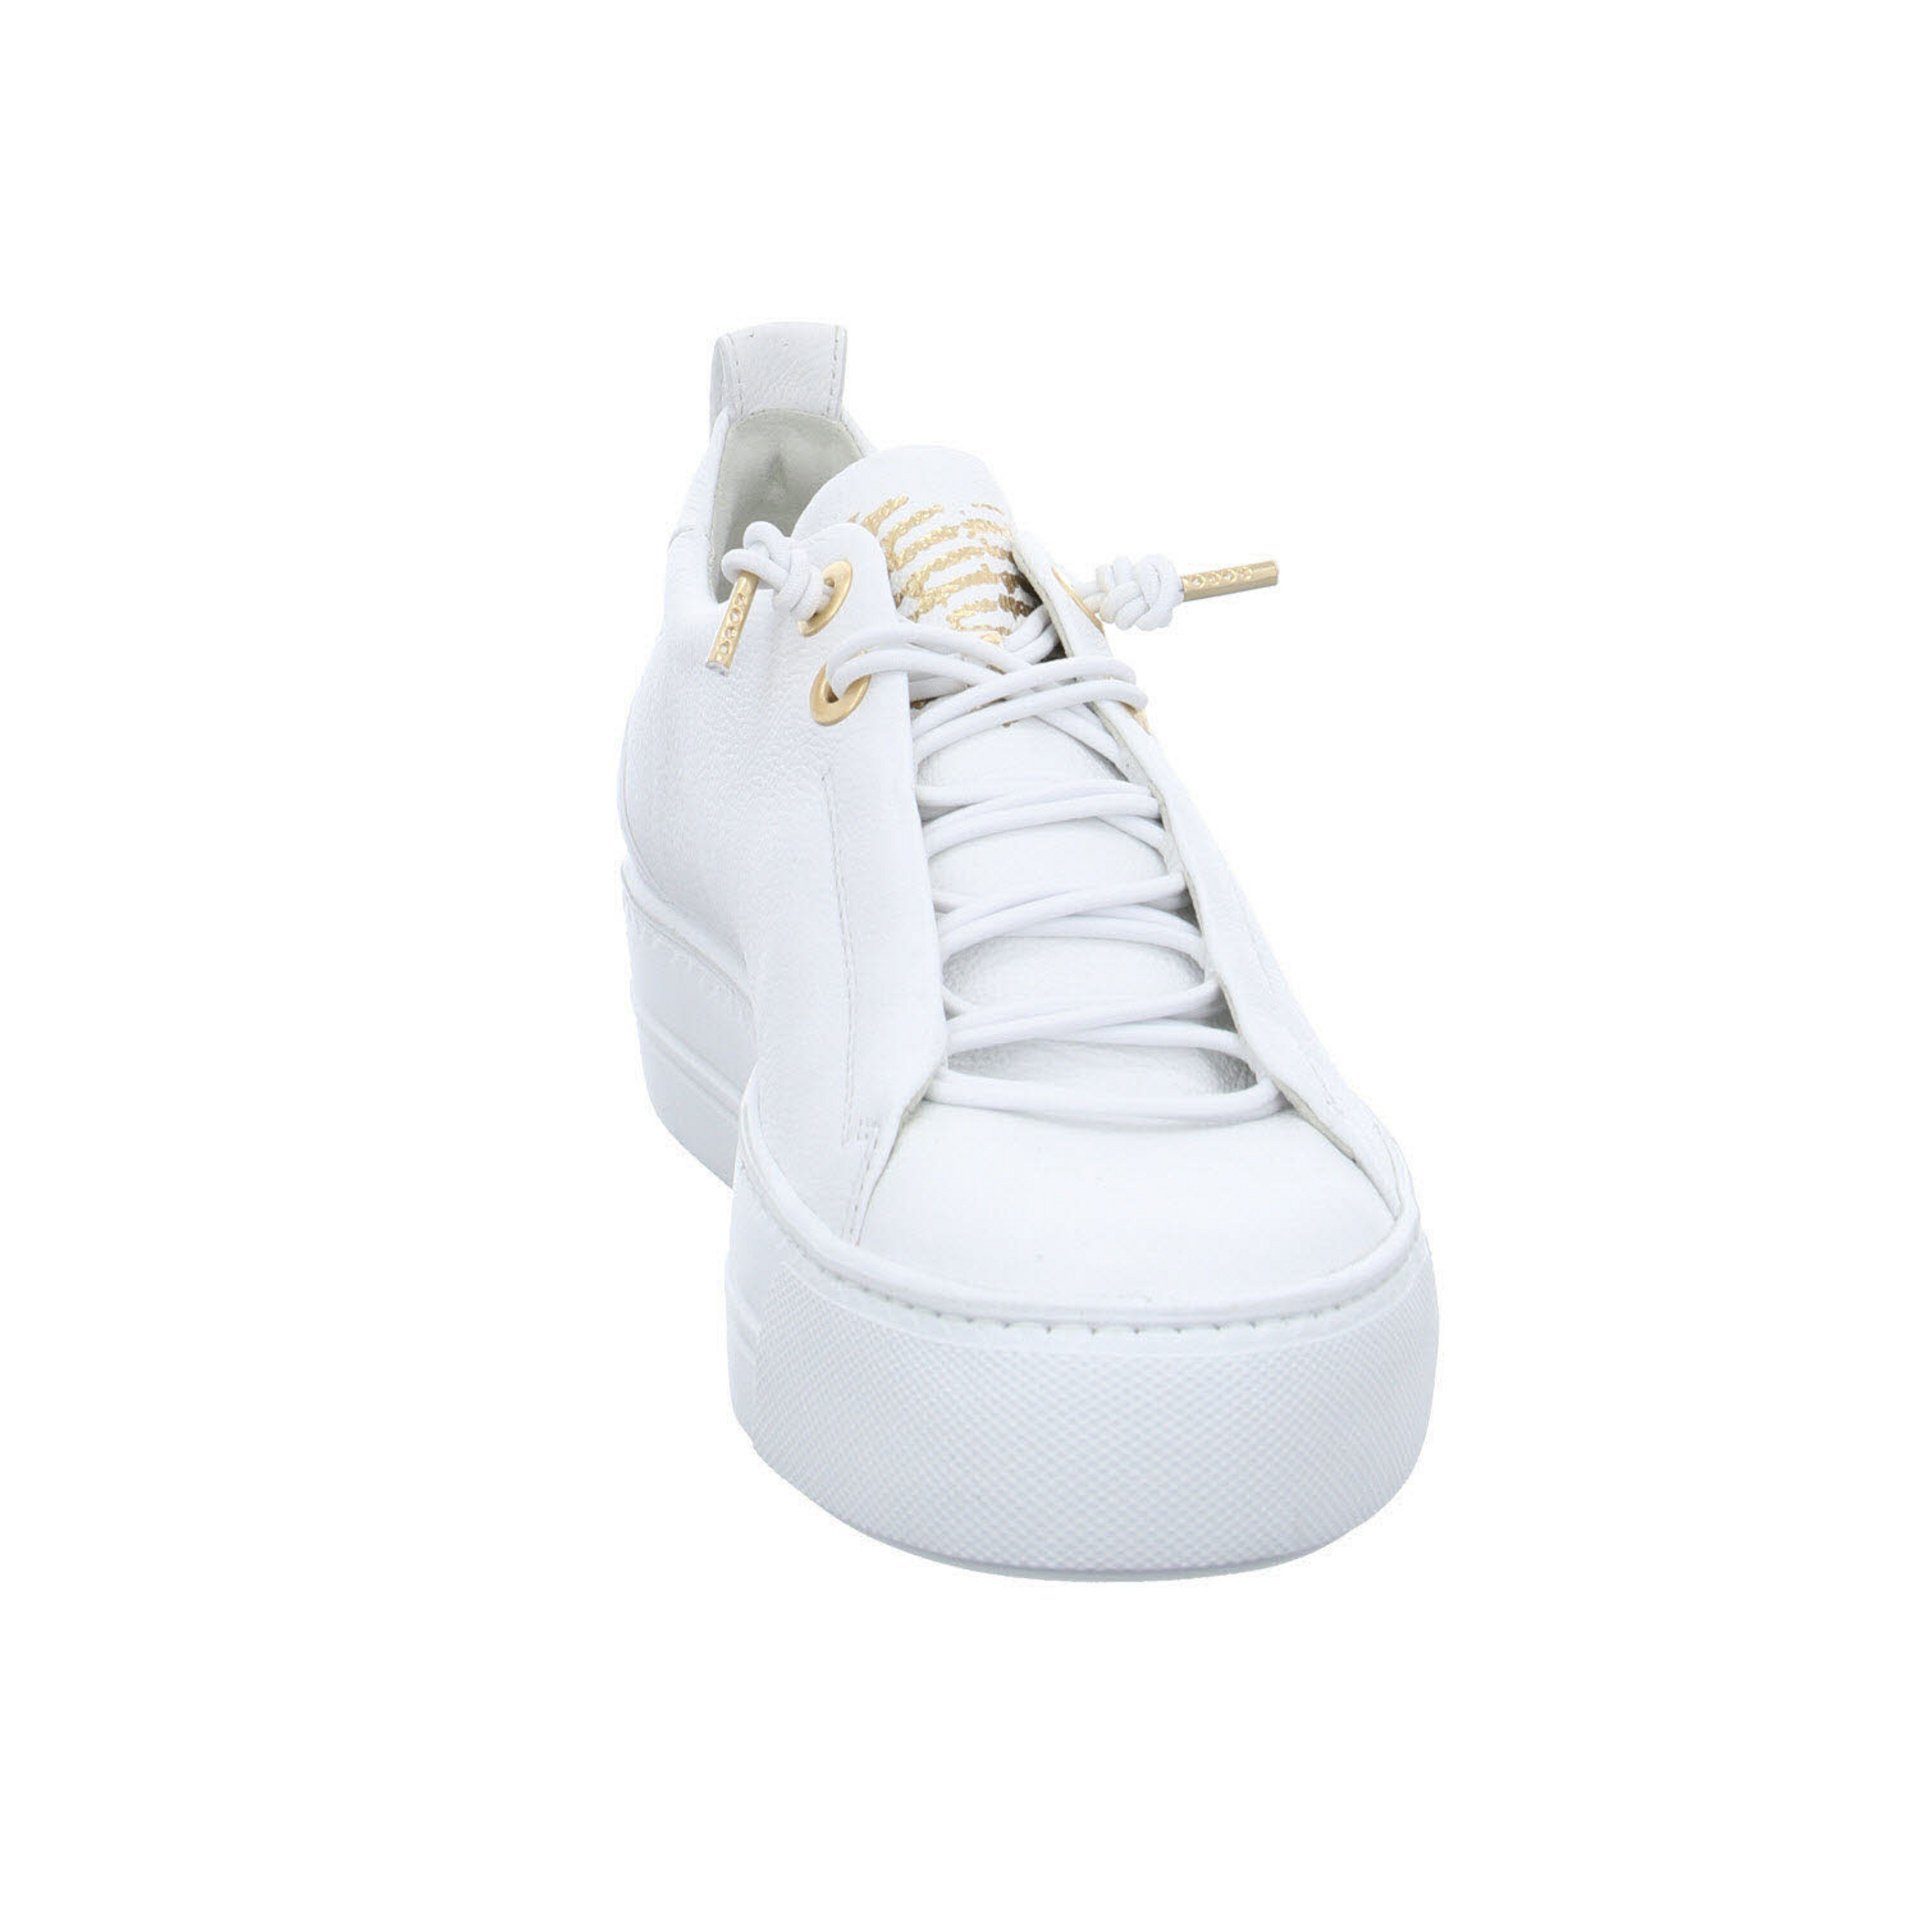 Paul Green Damen Sneaker Schuhe white/gold Glattleder Schnürschuh Slip-On Sneaker